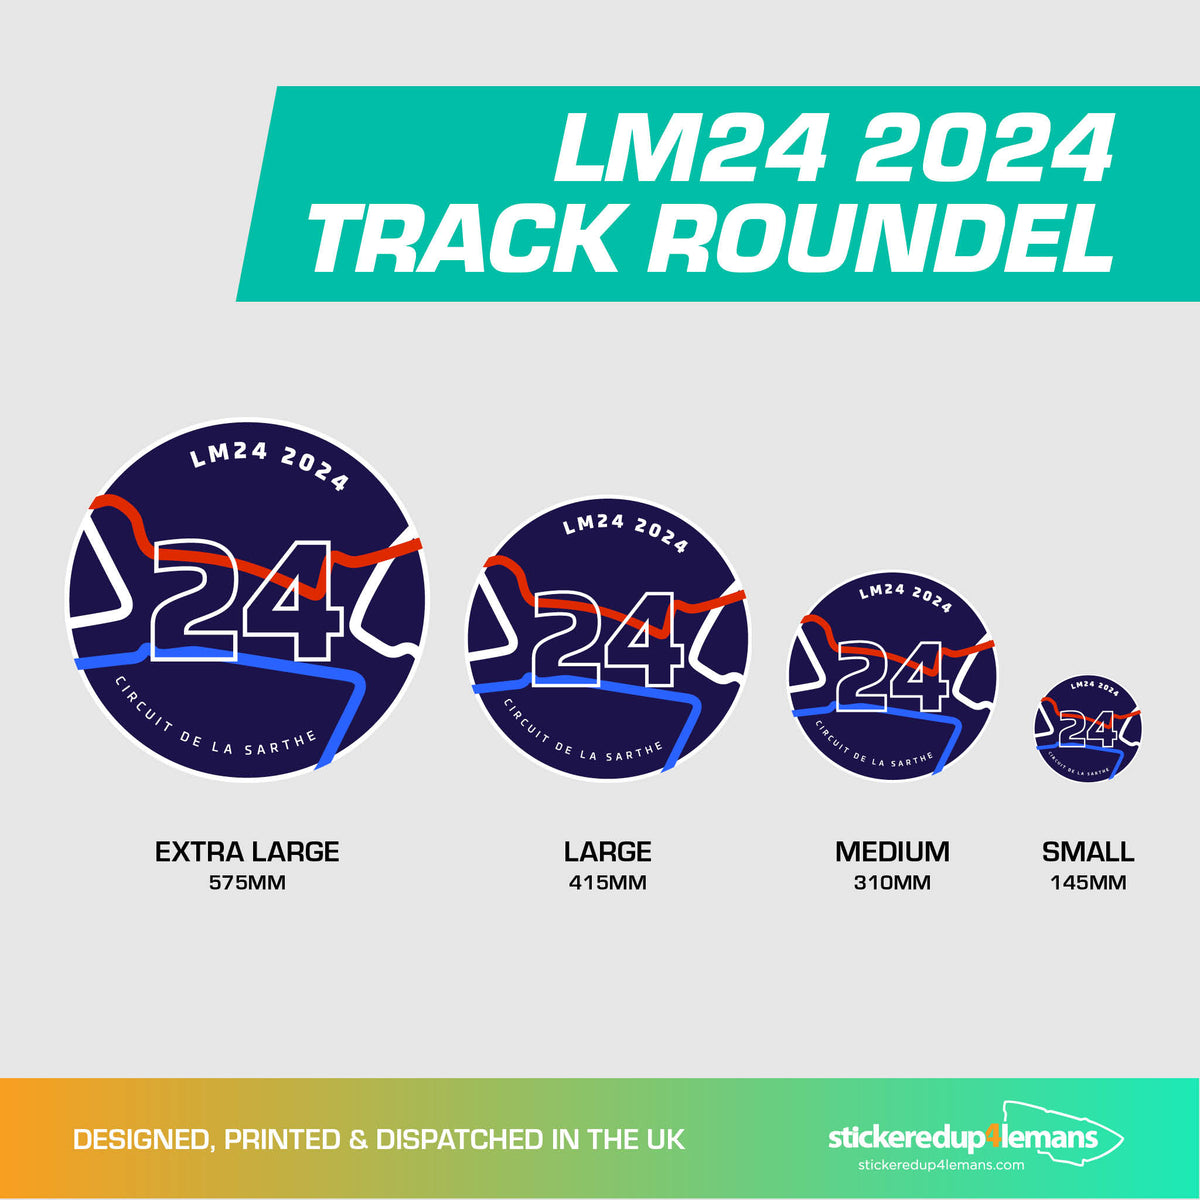 LM24 2024 Track Roundel